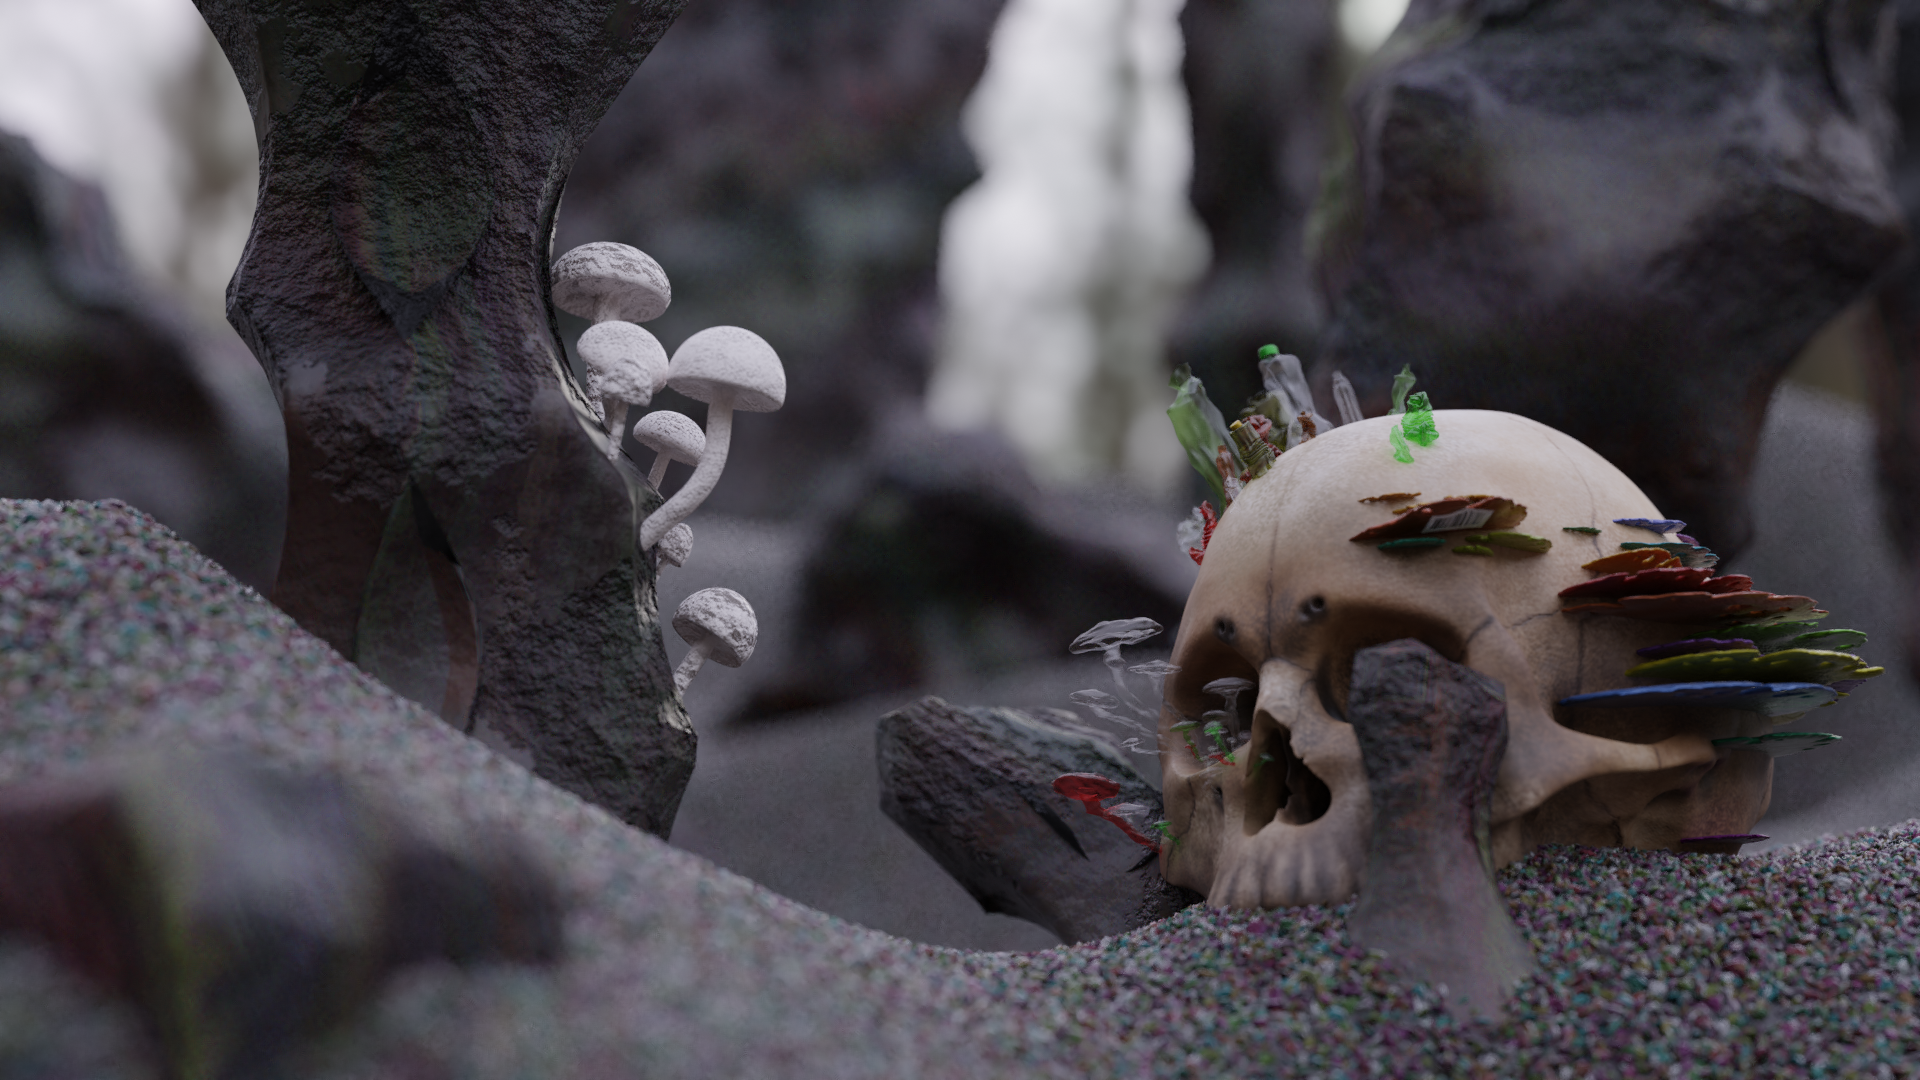 Mushrooms and Skulls s23